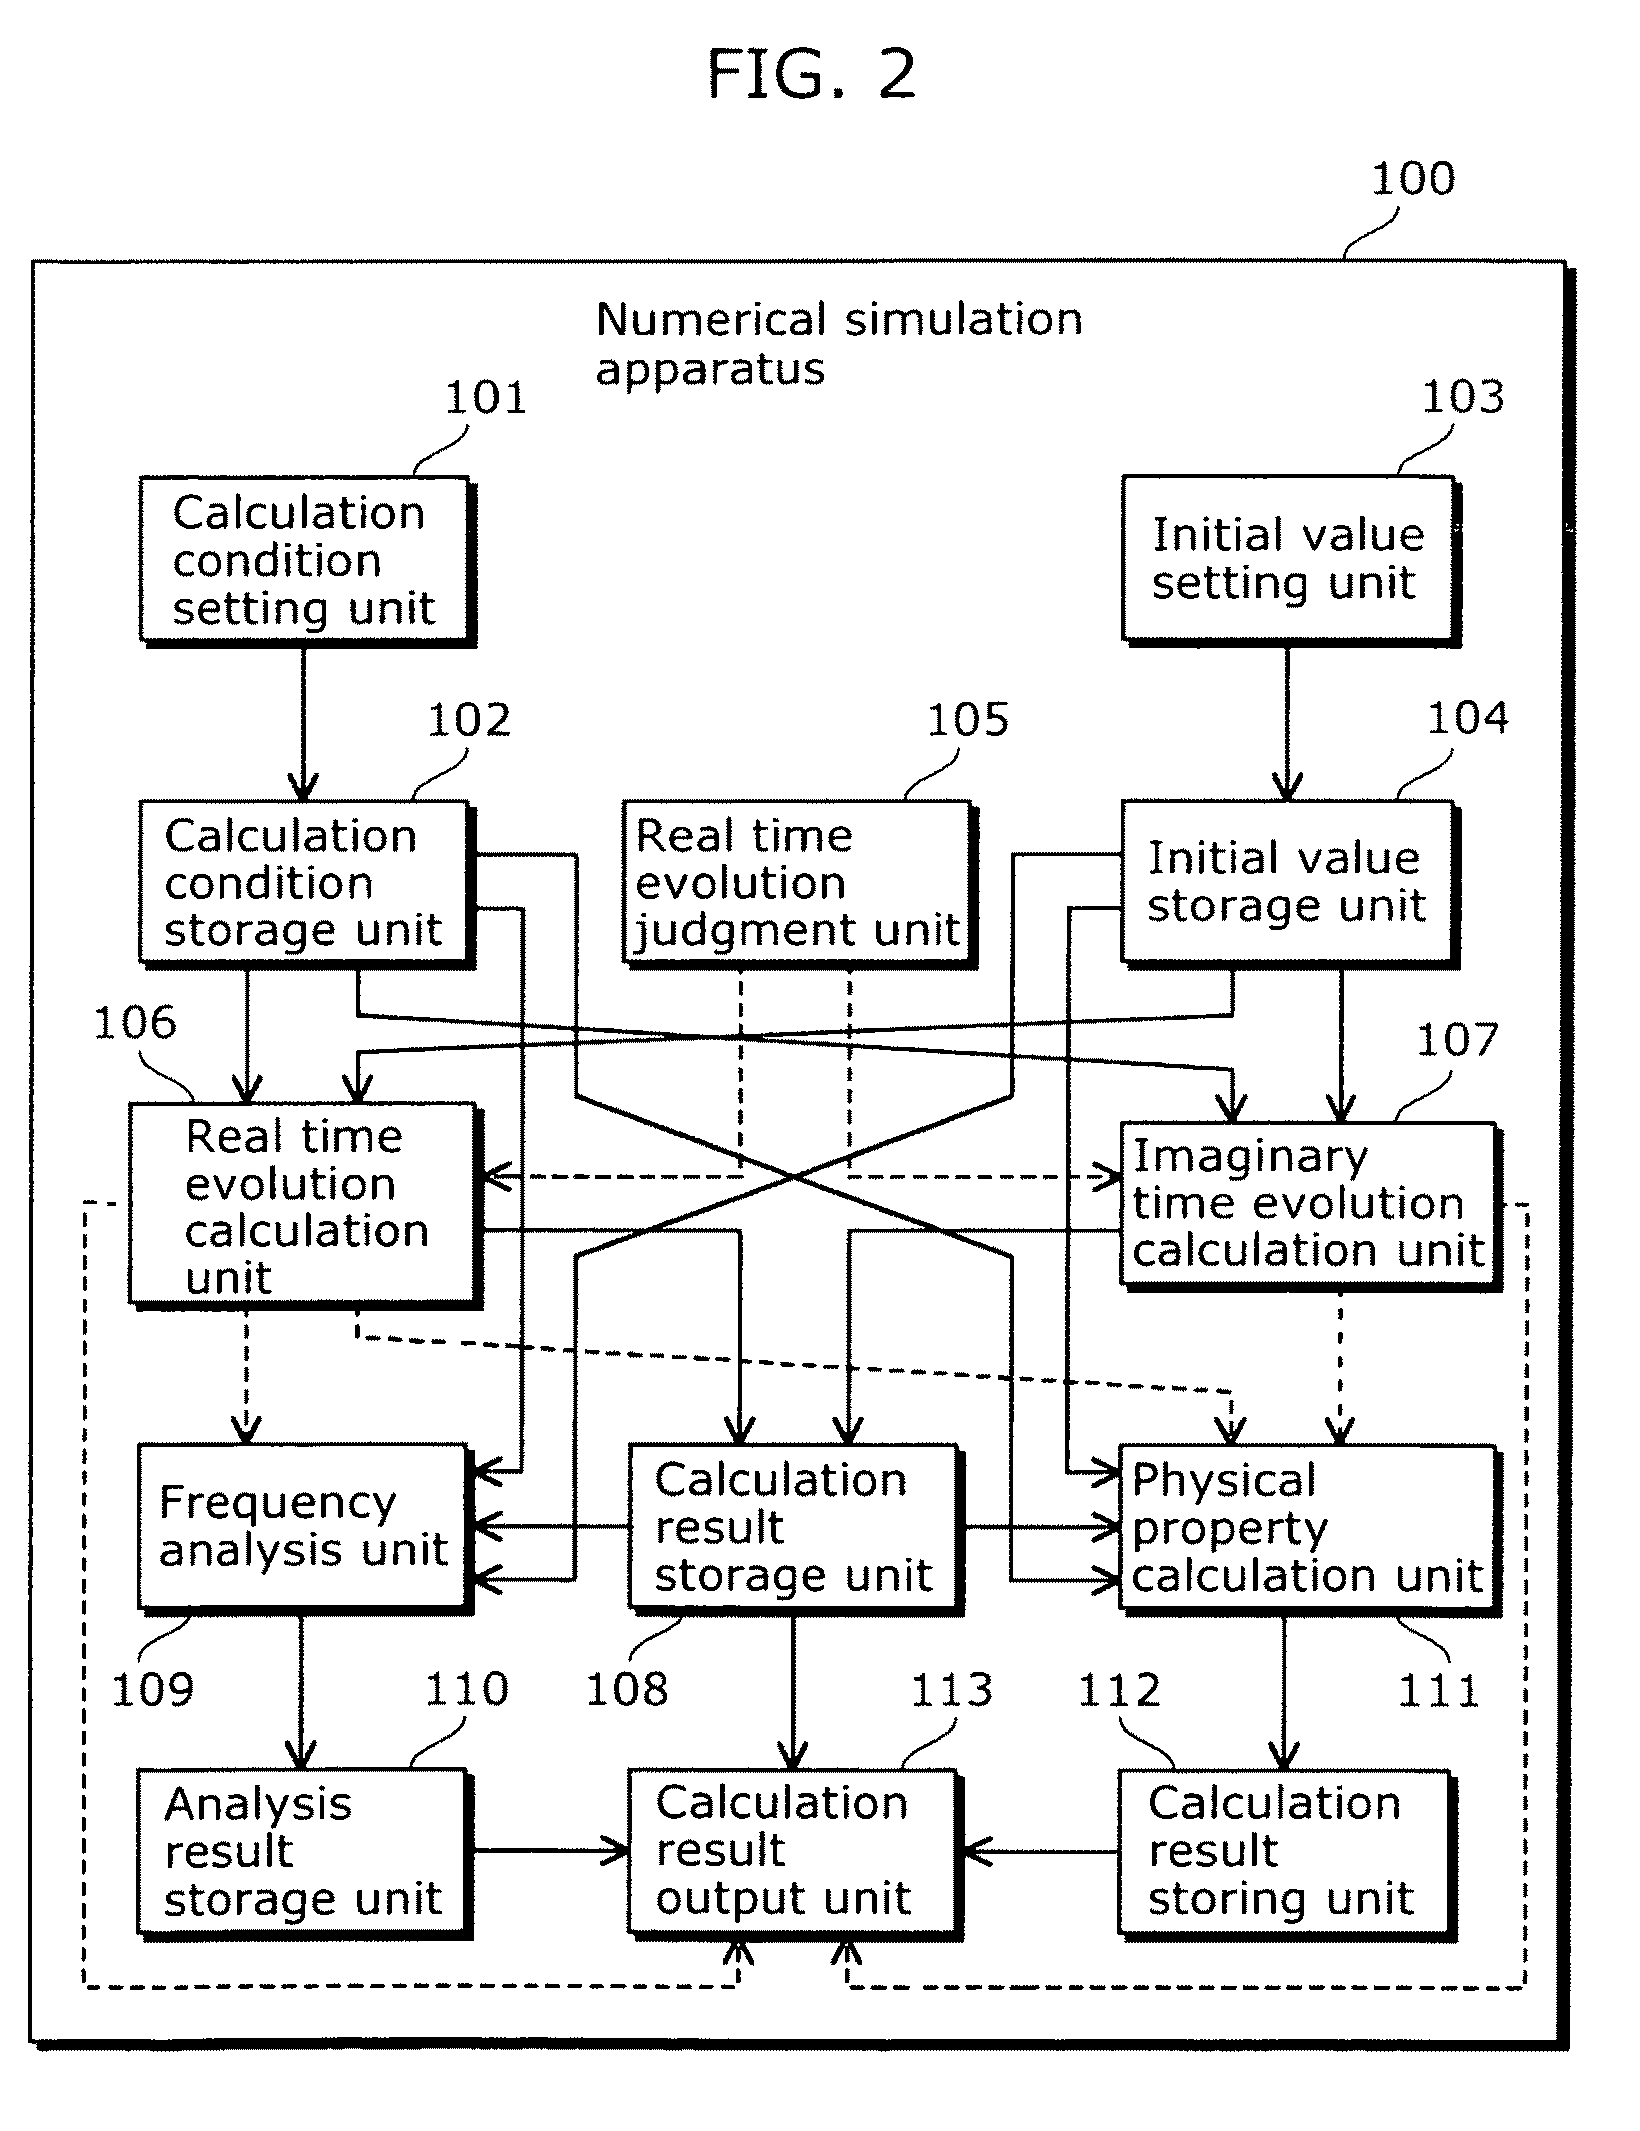 Numerical simulation apparatus for time dependent schrödinger equation